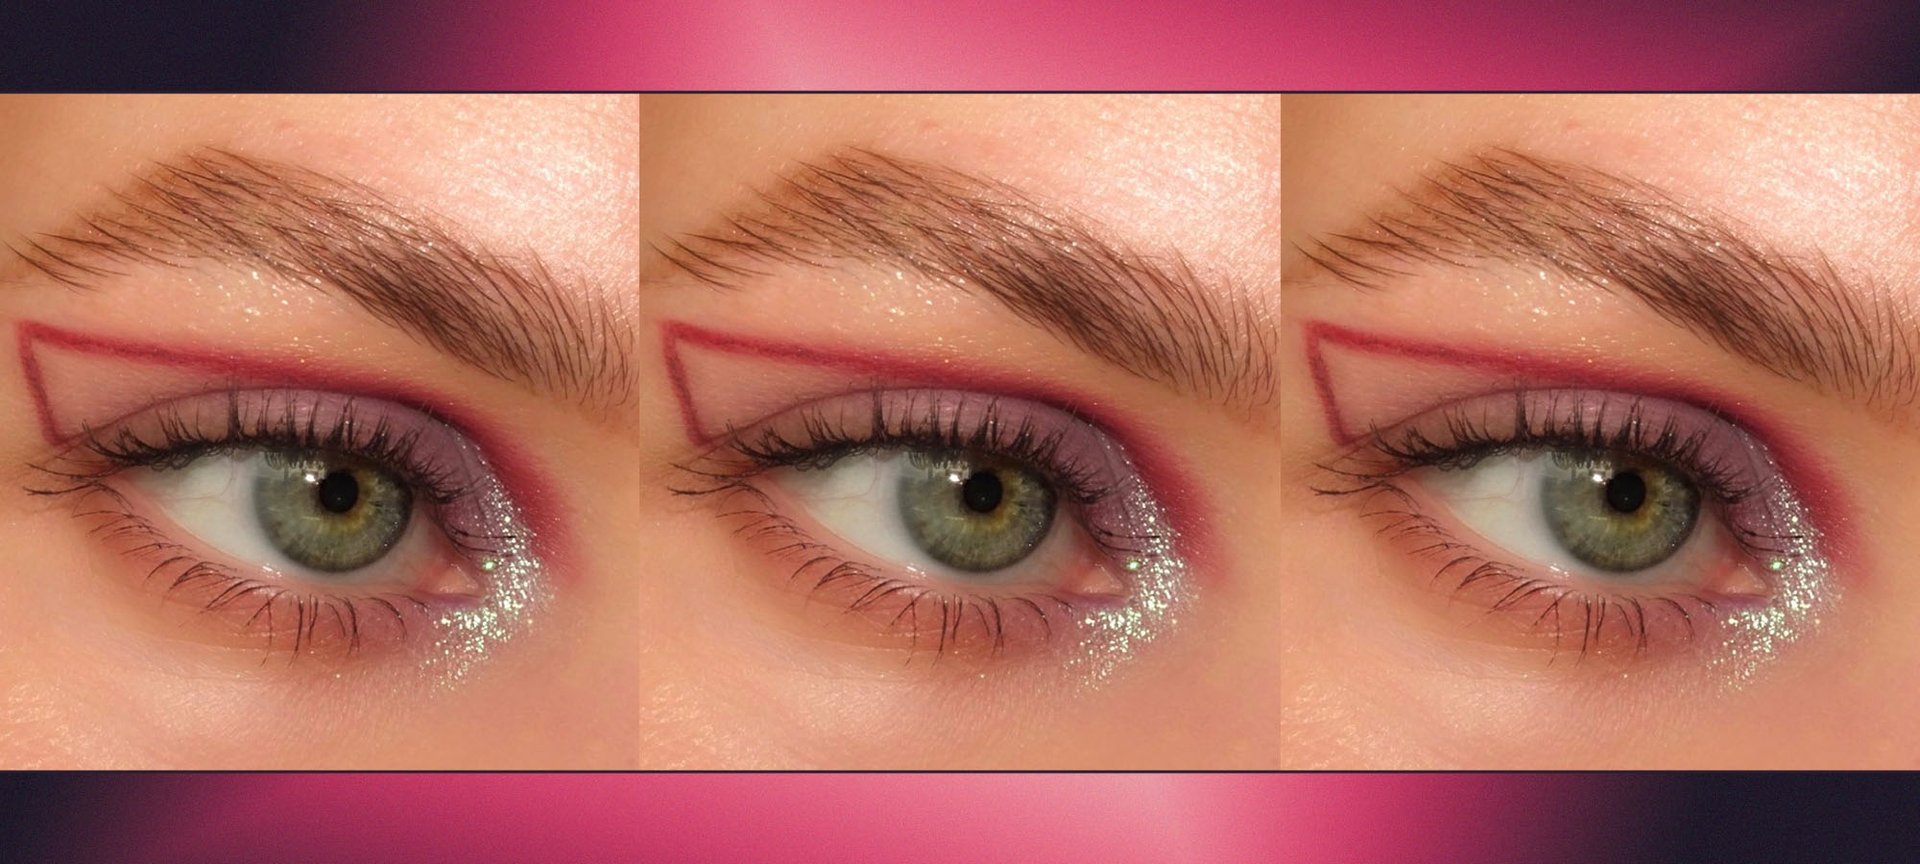 How to Do Eyeliner for Almond Eyes? 